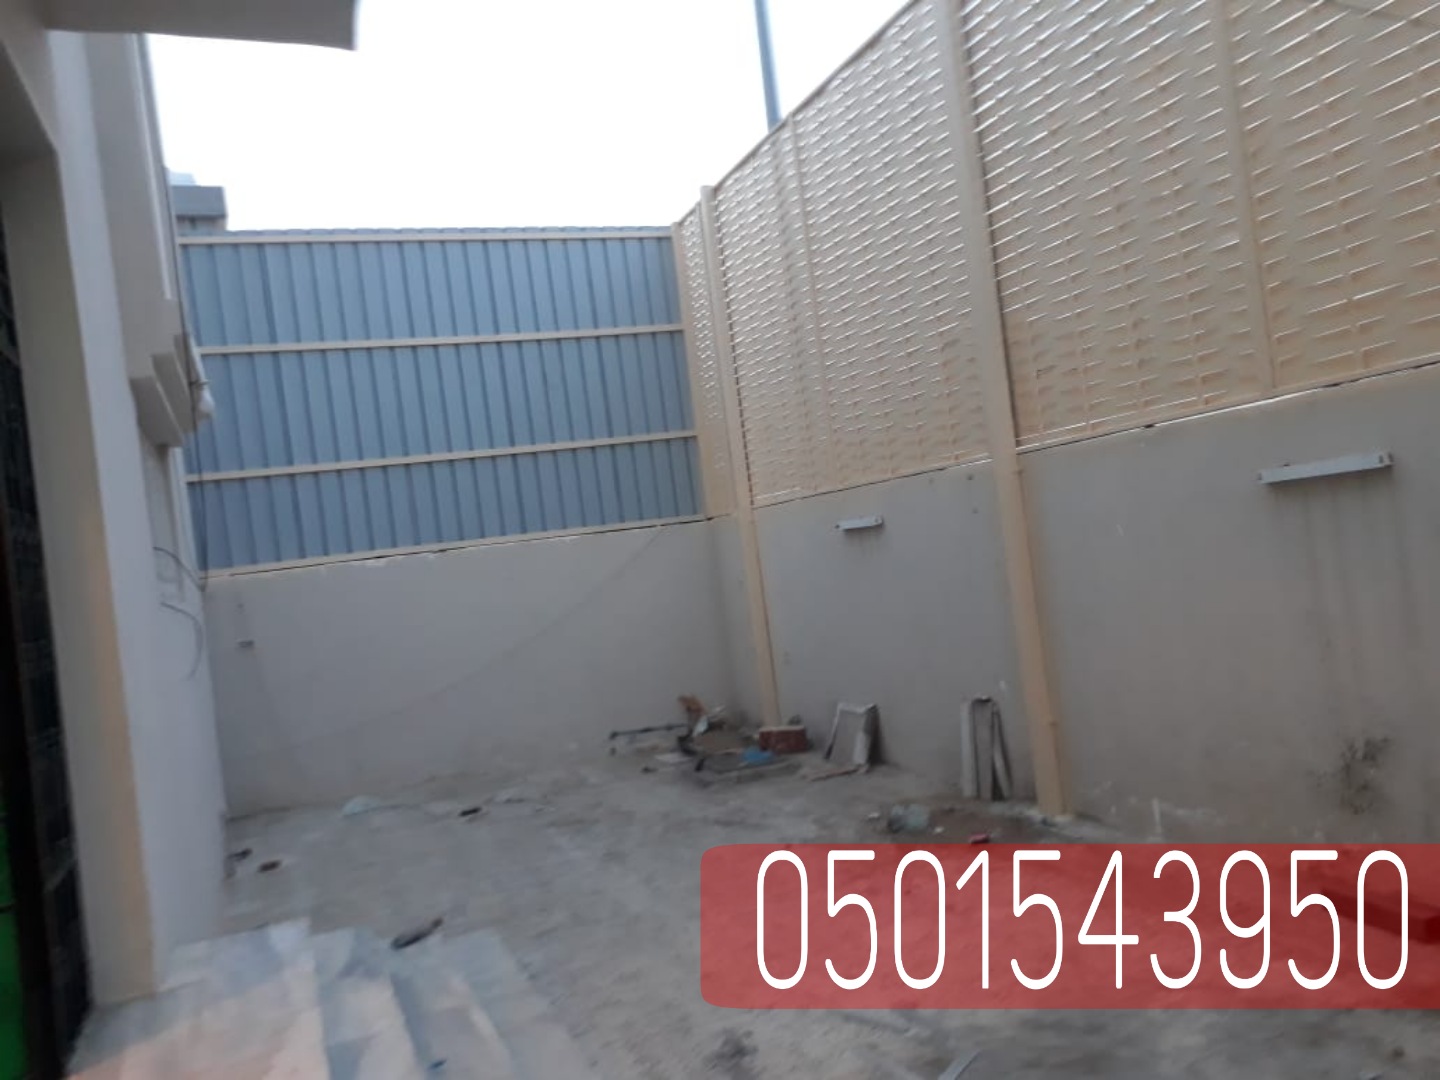 تركيب سواتر جدران في جدة , 0501543950 P_22306gdfa2